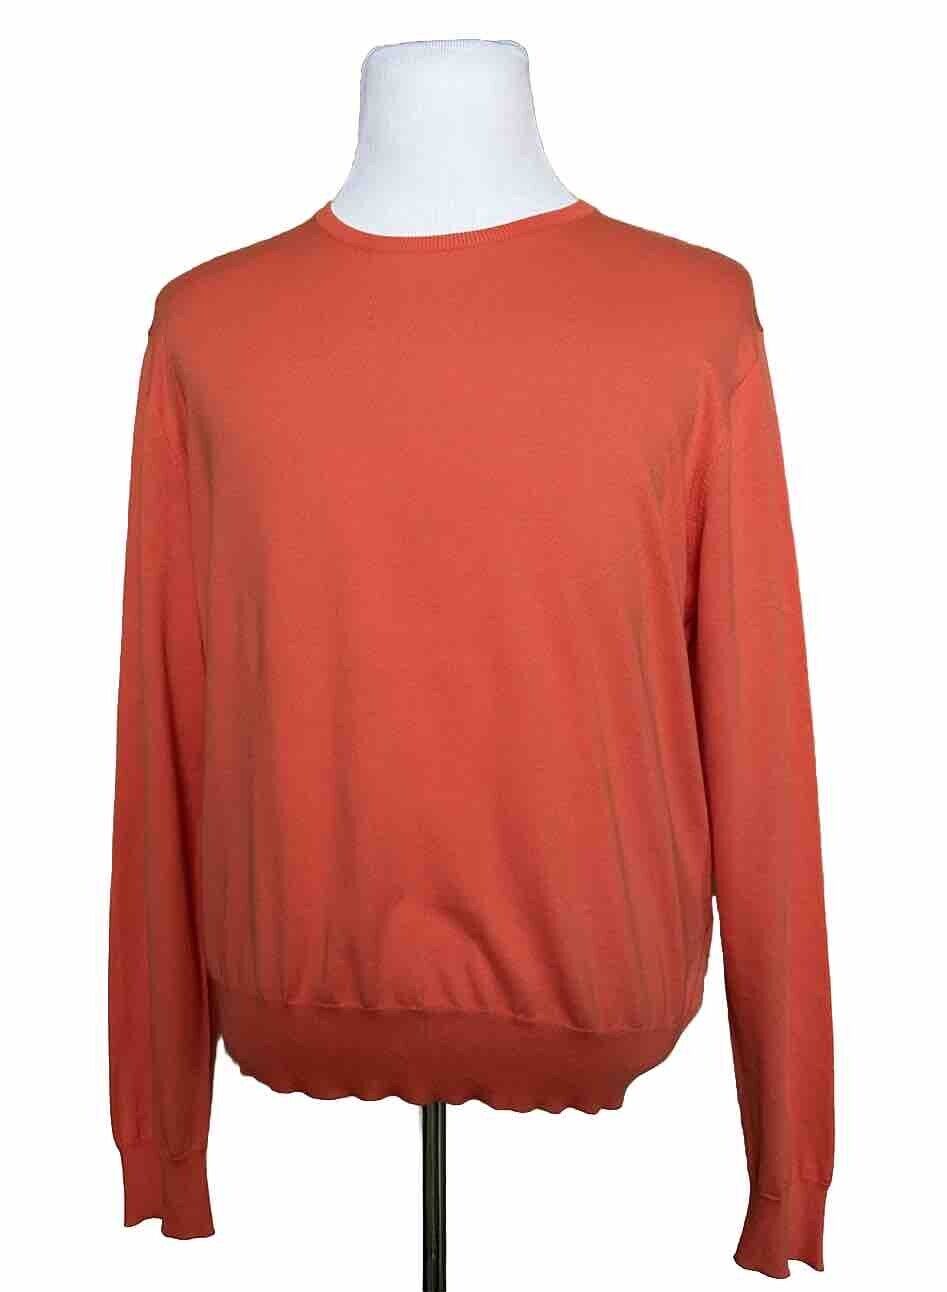 NWT $695 Polo Ralph Lauren Purple Label Men's Cotton Orange Sweater XL Italy